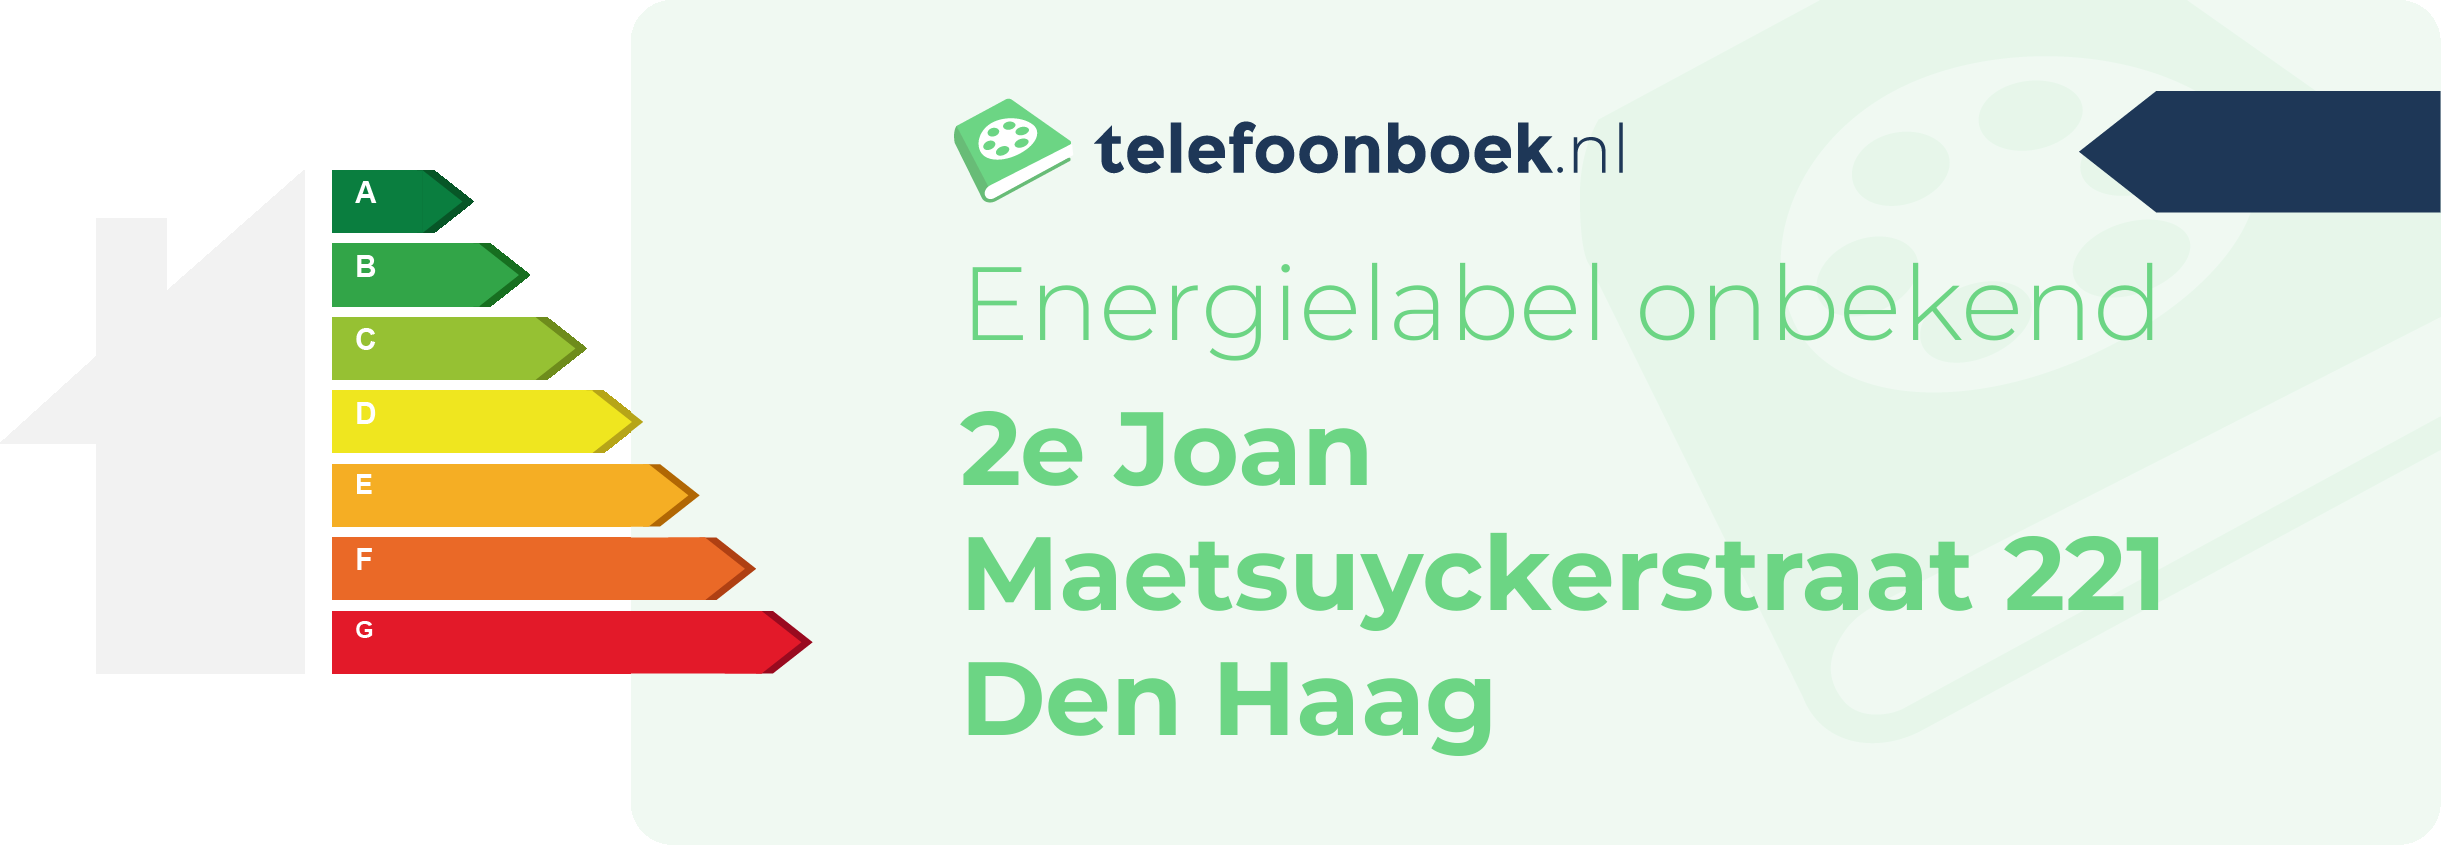 Energielabel 2e Joan Maetsuyckerstraat 221 Den Haag